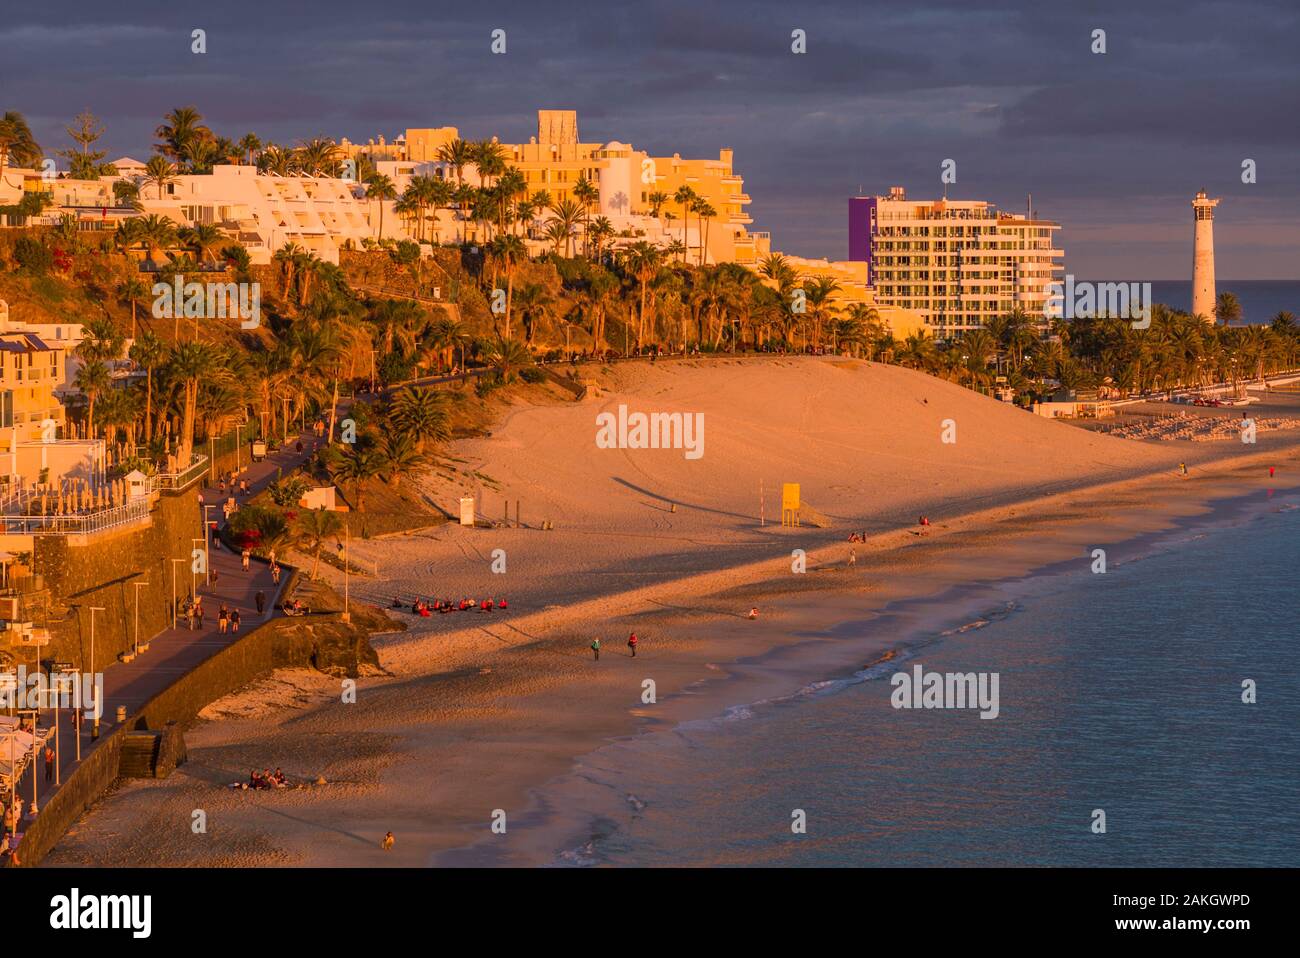 Spain, Canary Islands, Fuerteventura Island, Morro Jable, of Playa de la Cebada beach, sunset Stock Photo